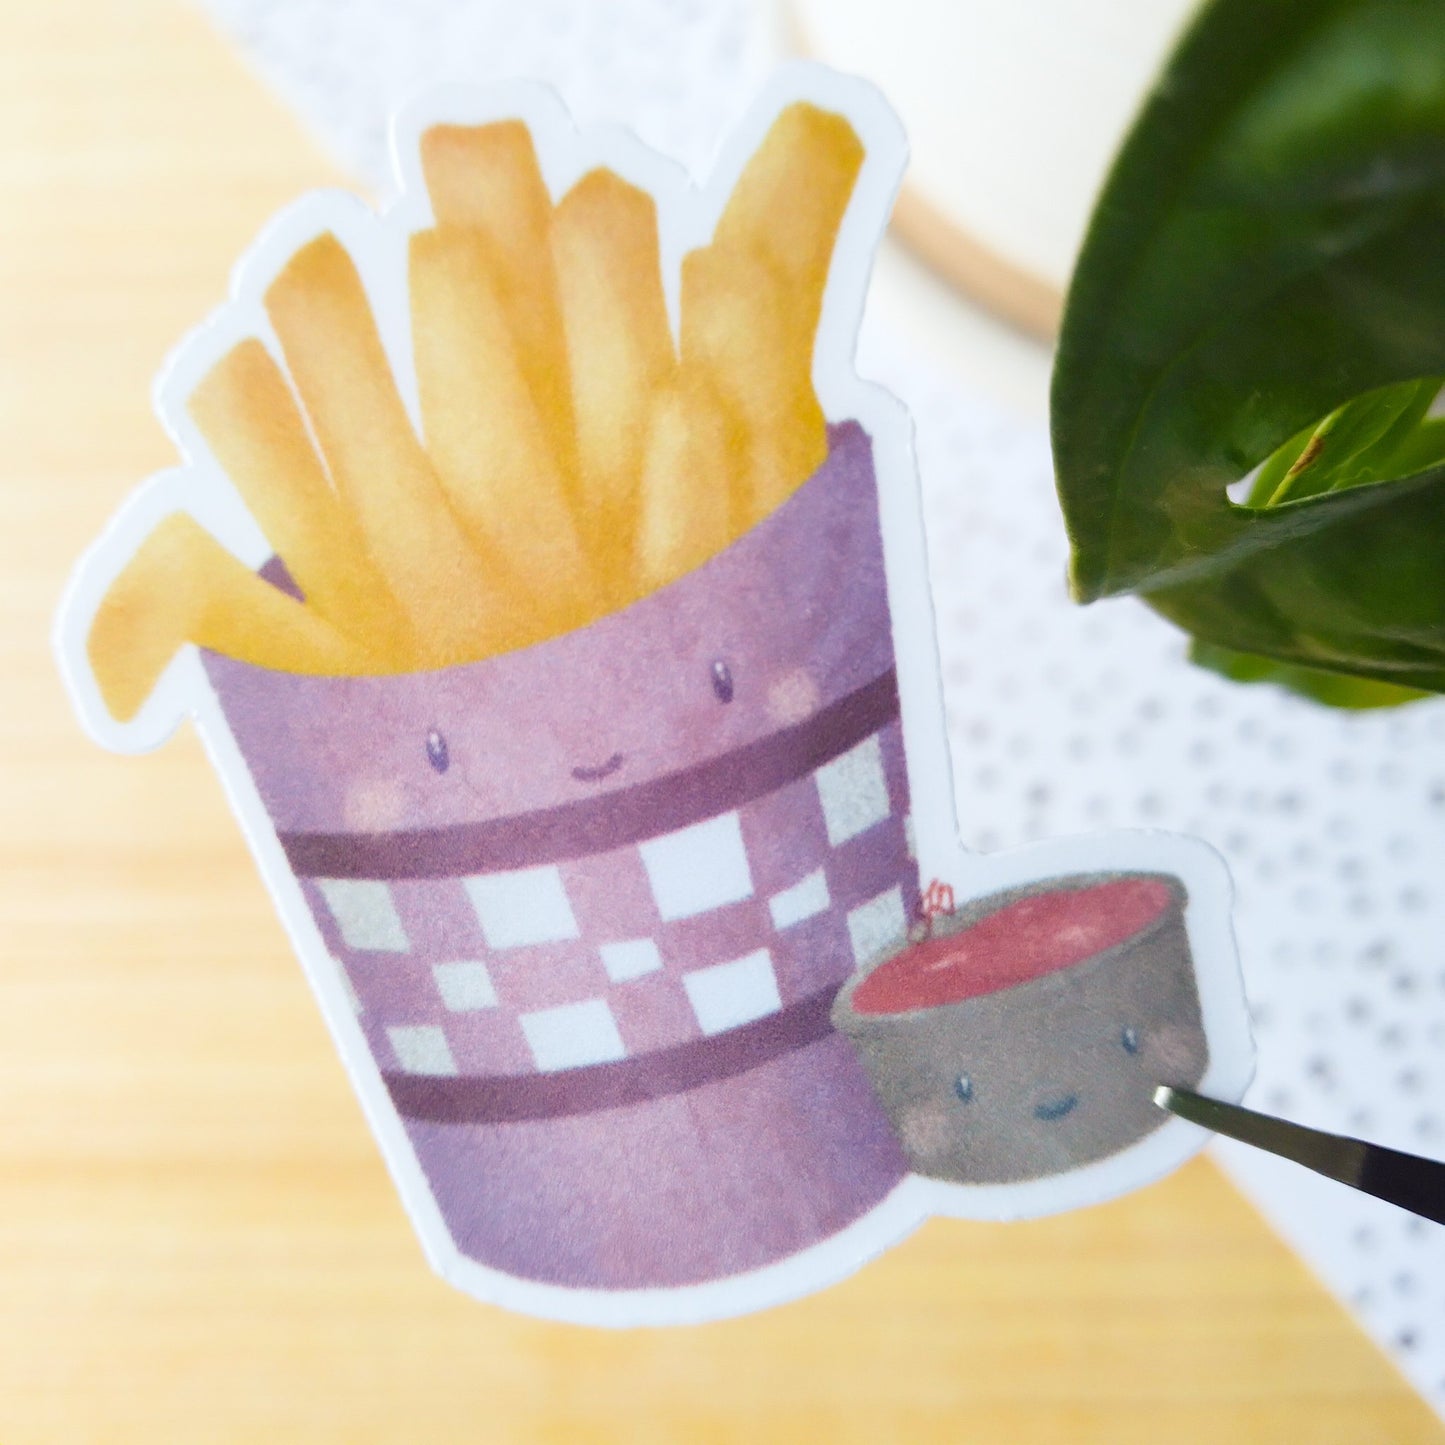 Cute Ketchup and Fries